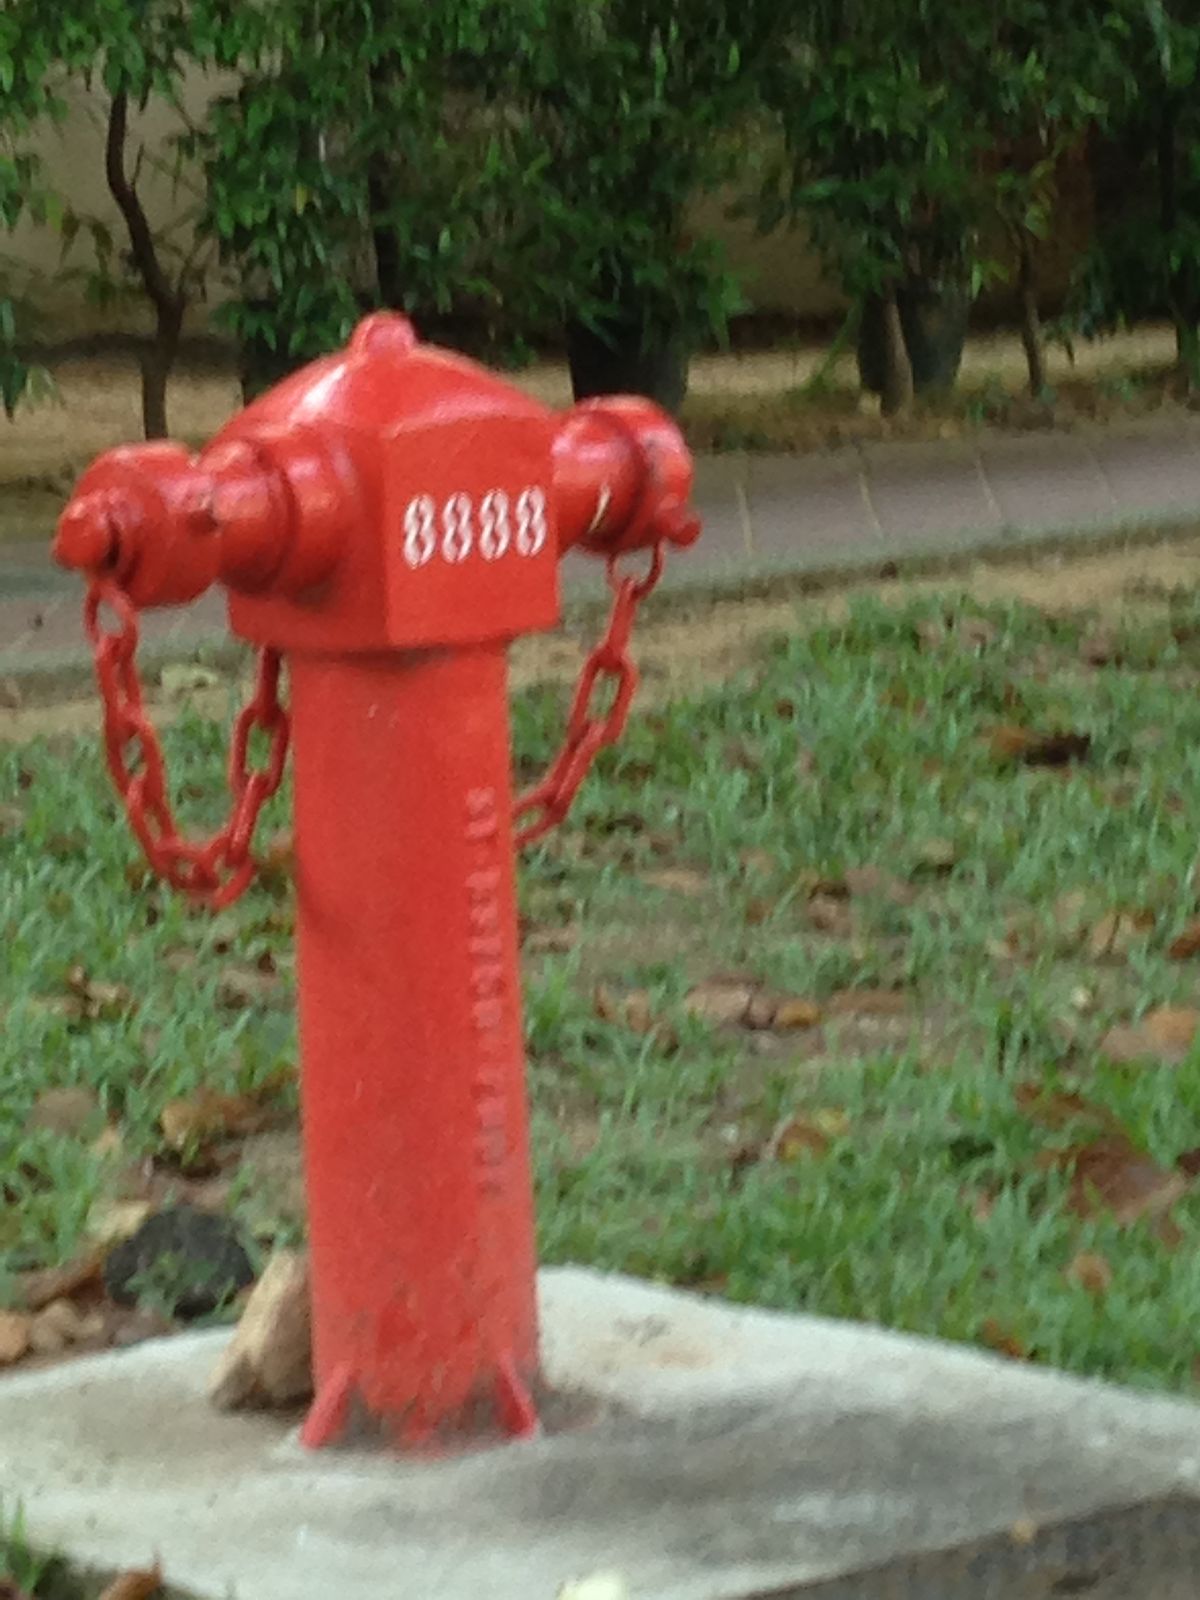 hydrant - Wiktionary